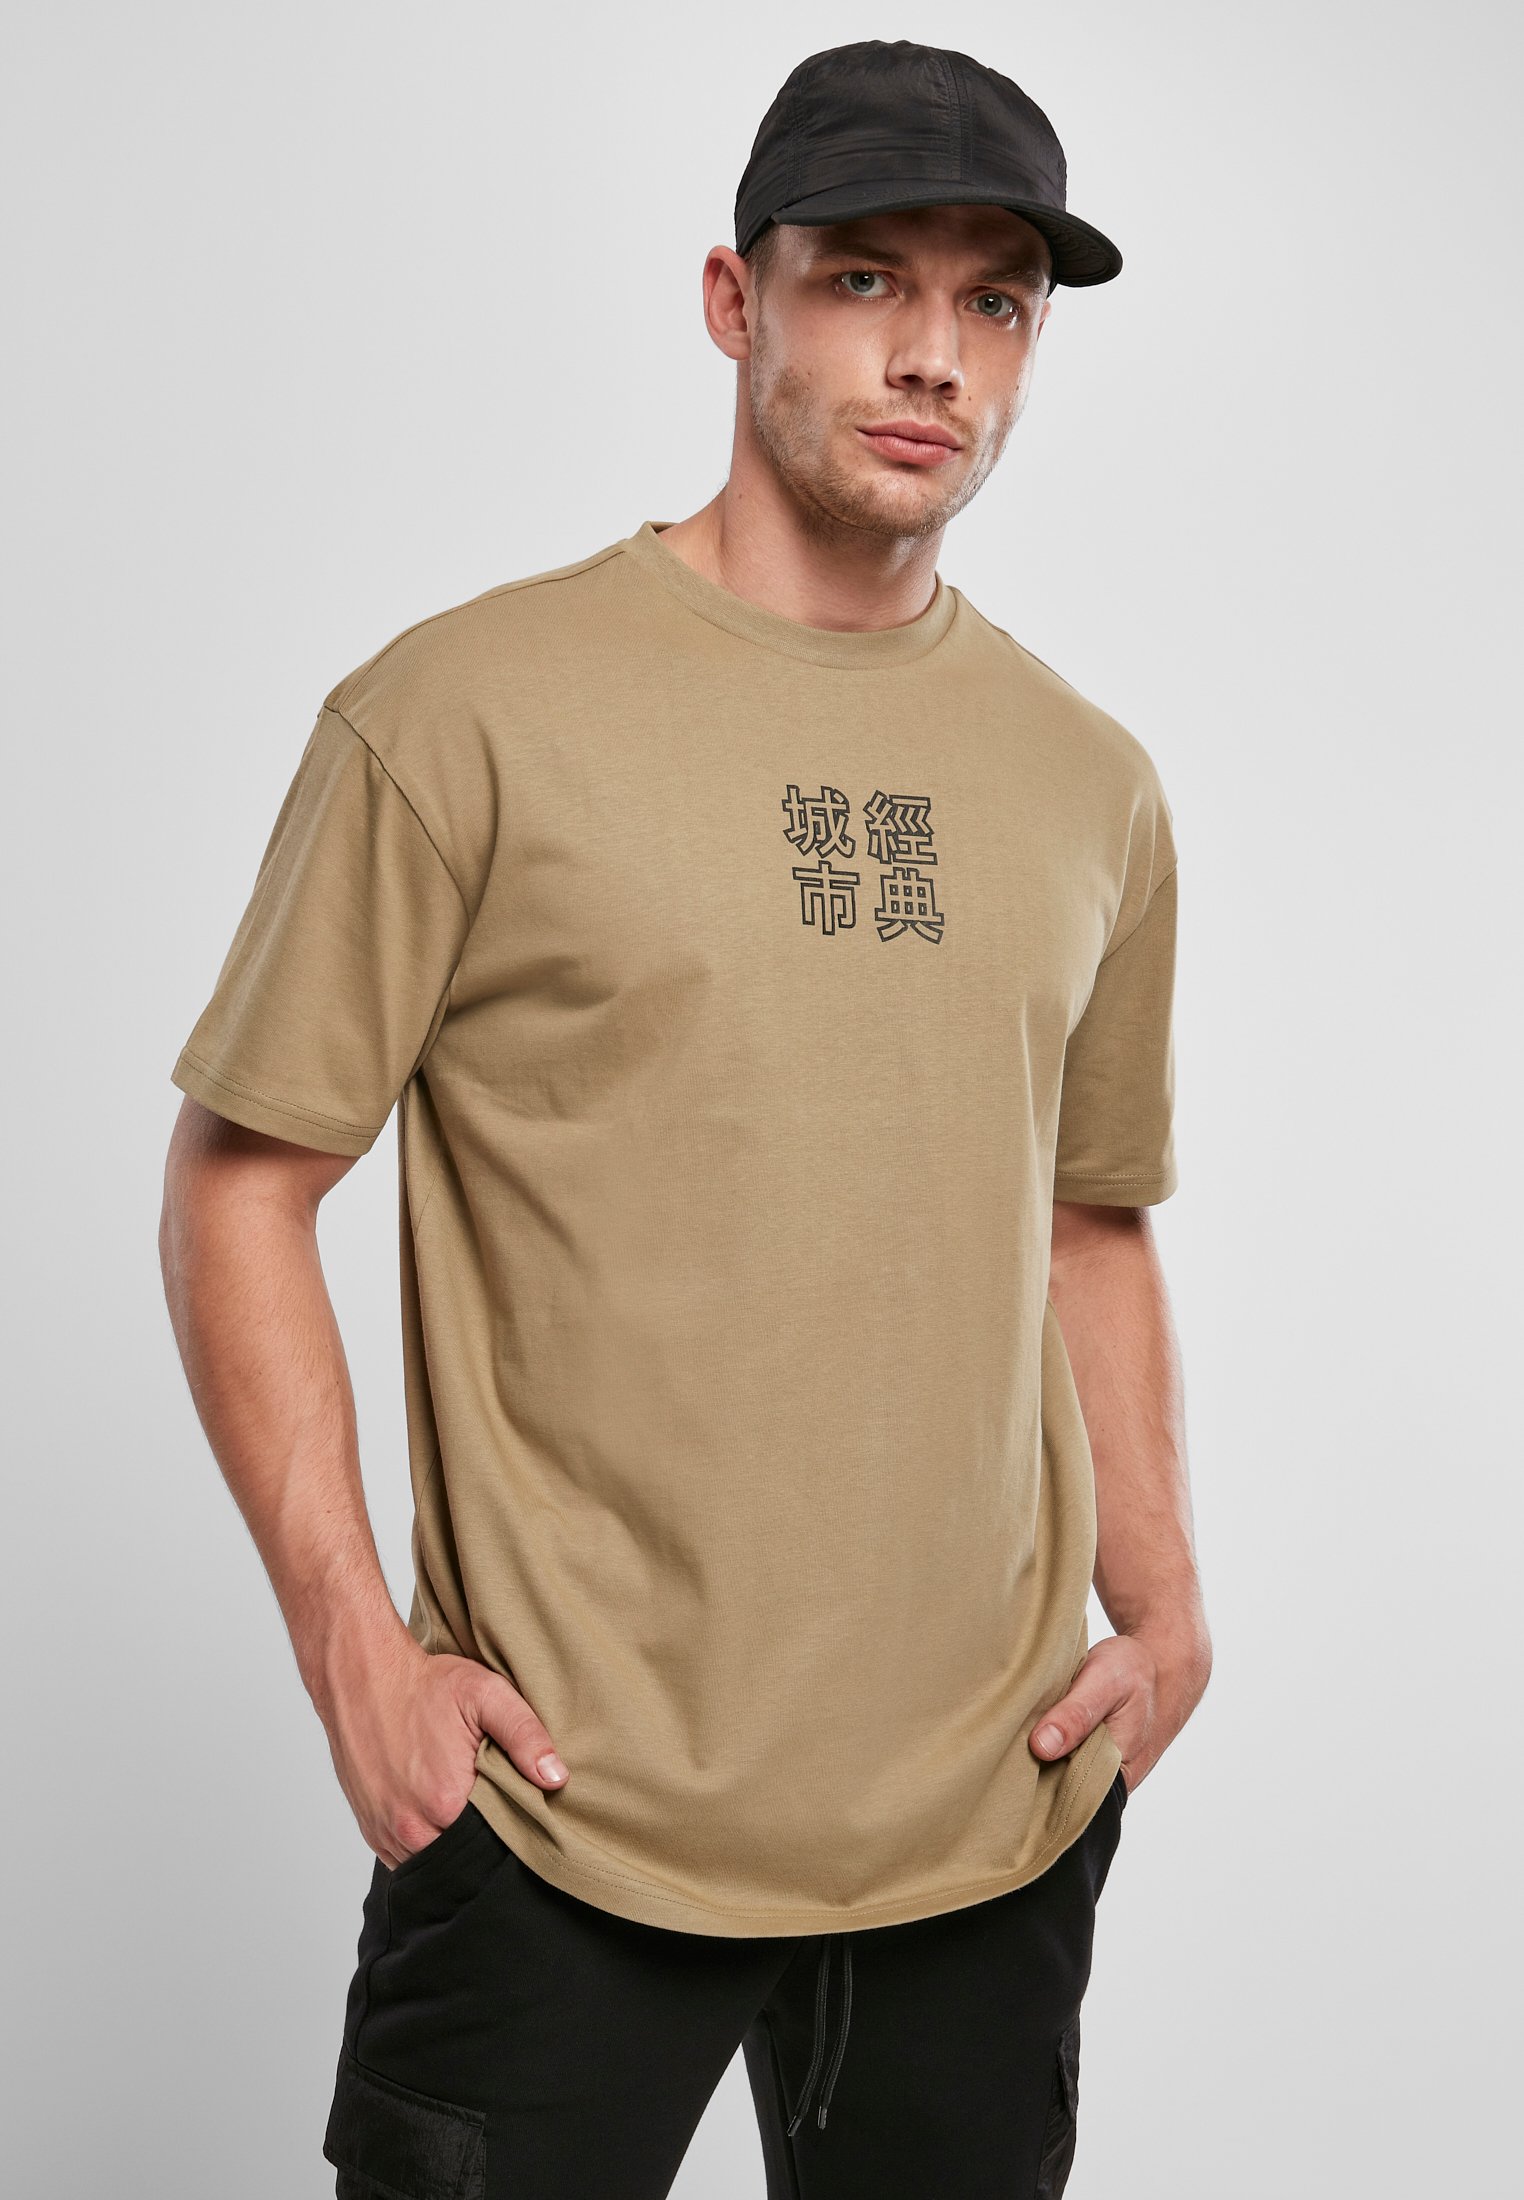 Chinese khaki t-shirt symbol/black